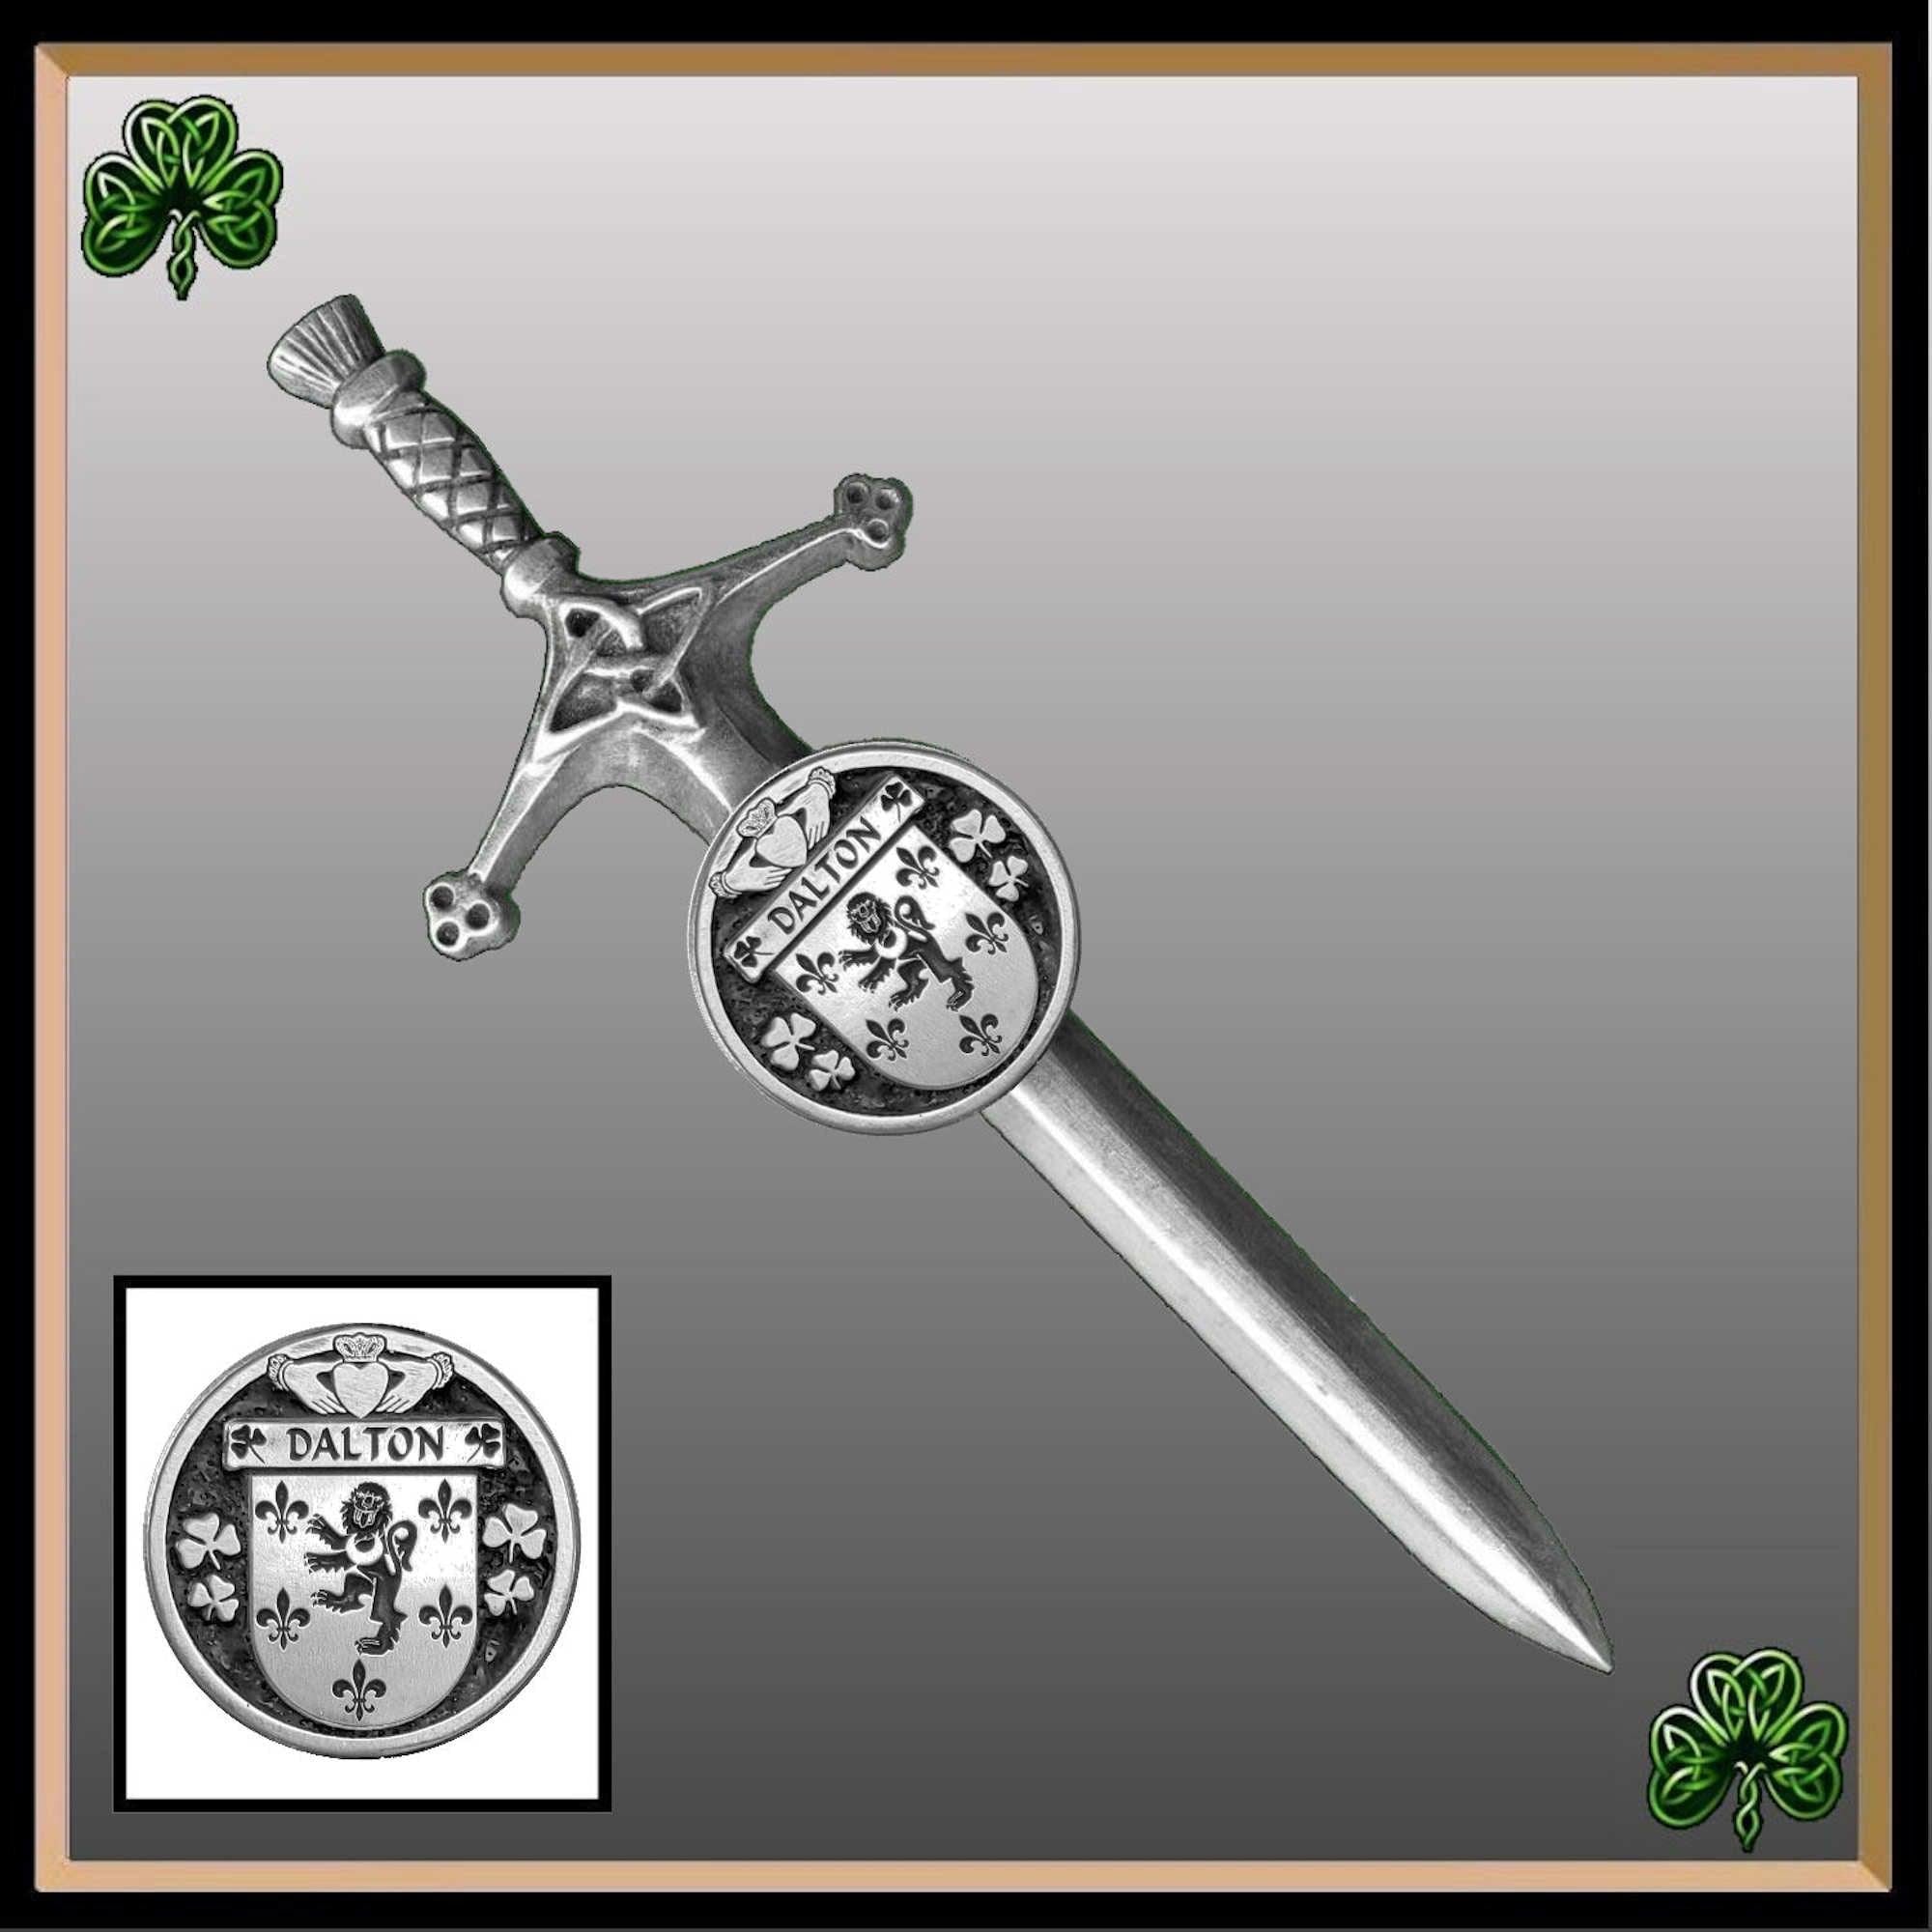 Dalton Irish Coat of Arms Disk Kilt Pin